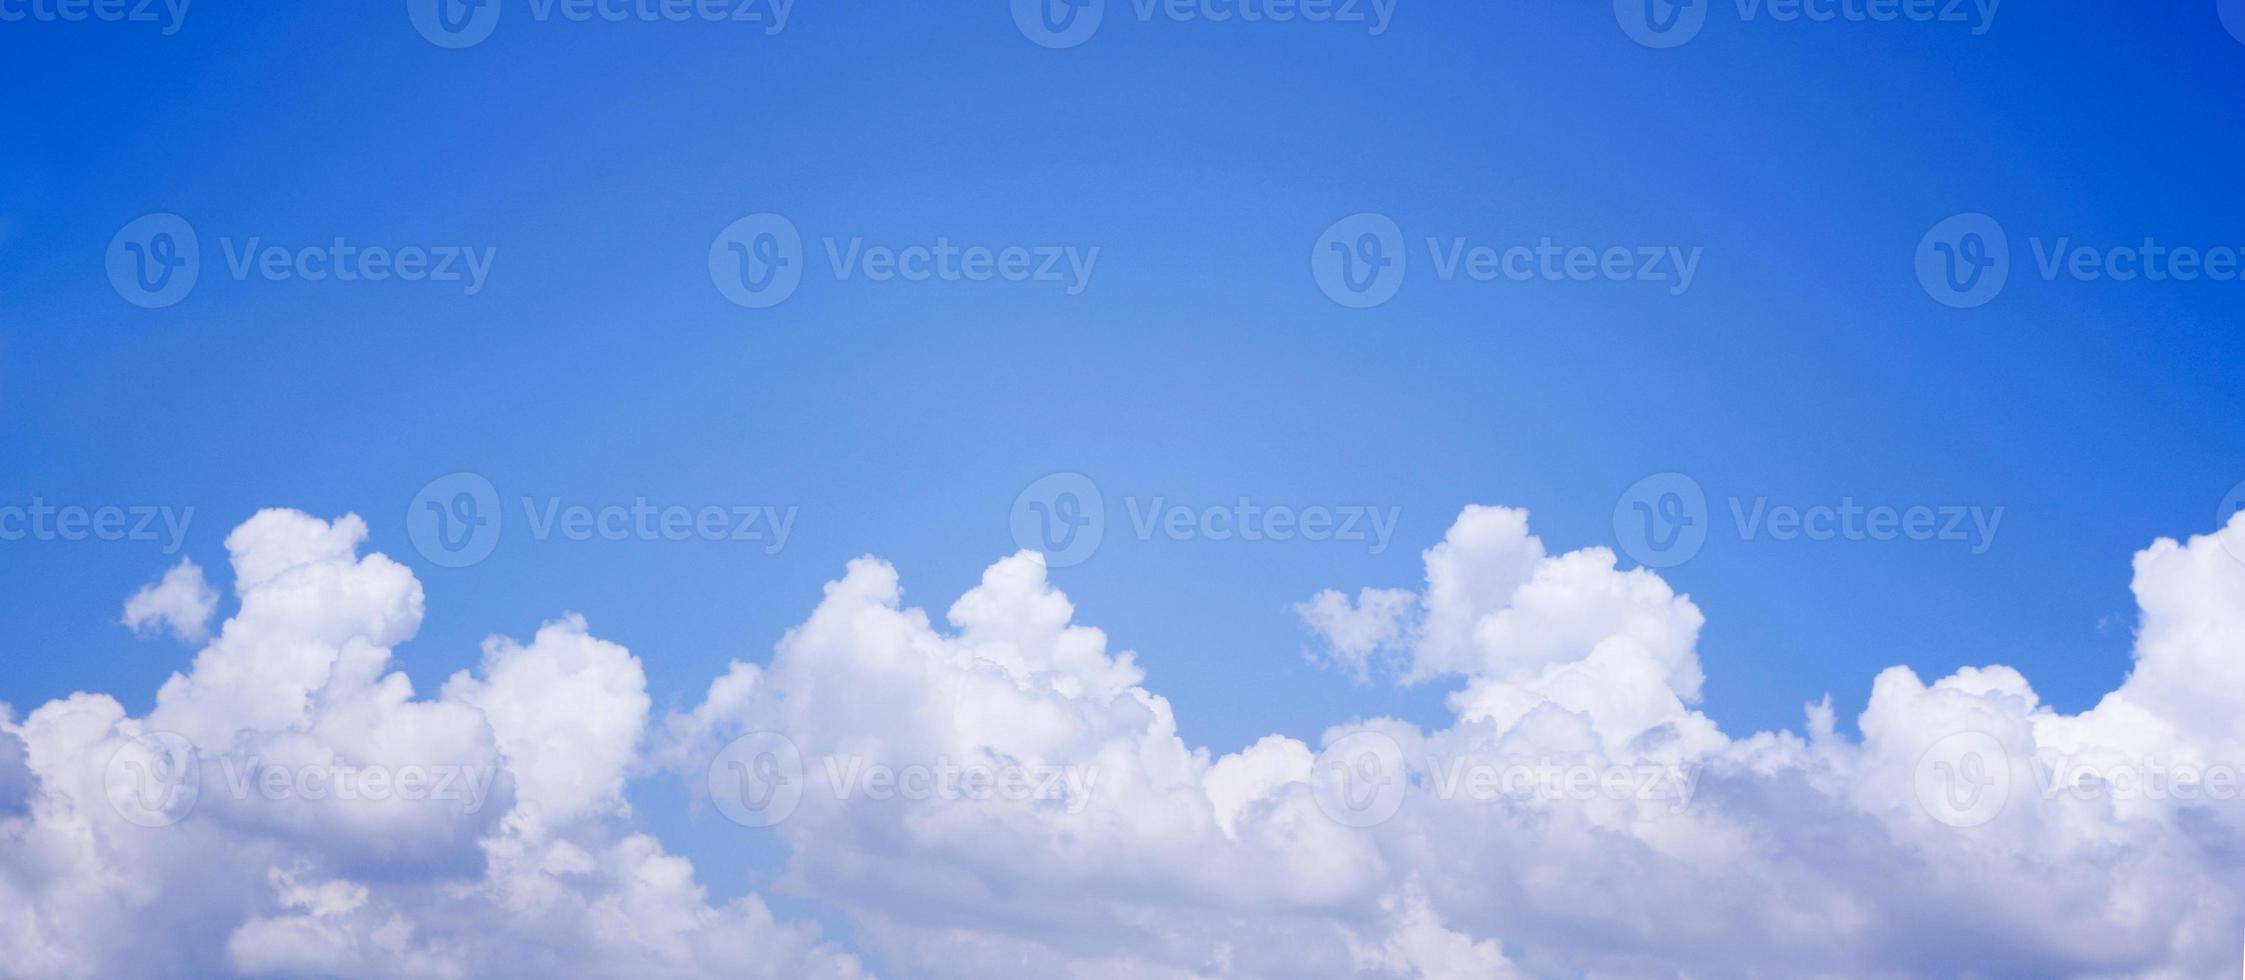 panorama blauw lucht met wolken foto